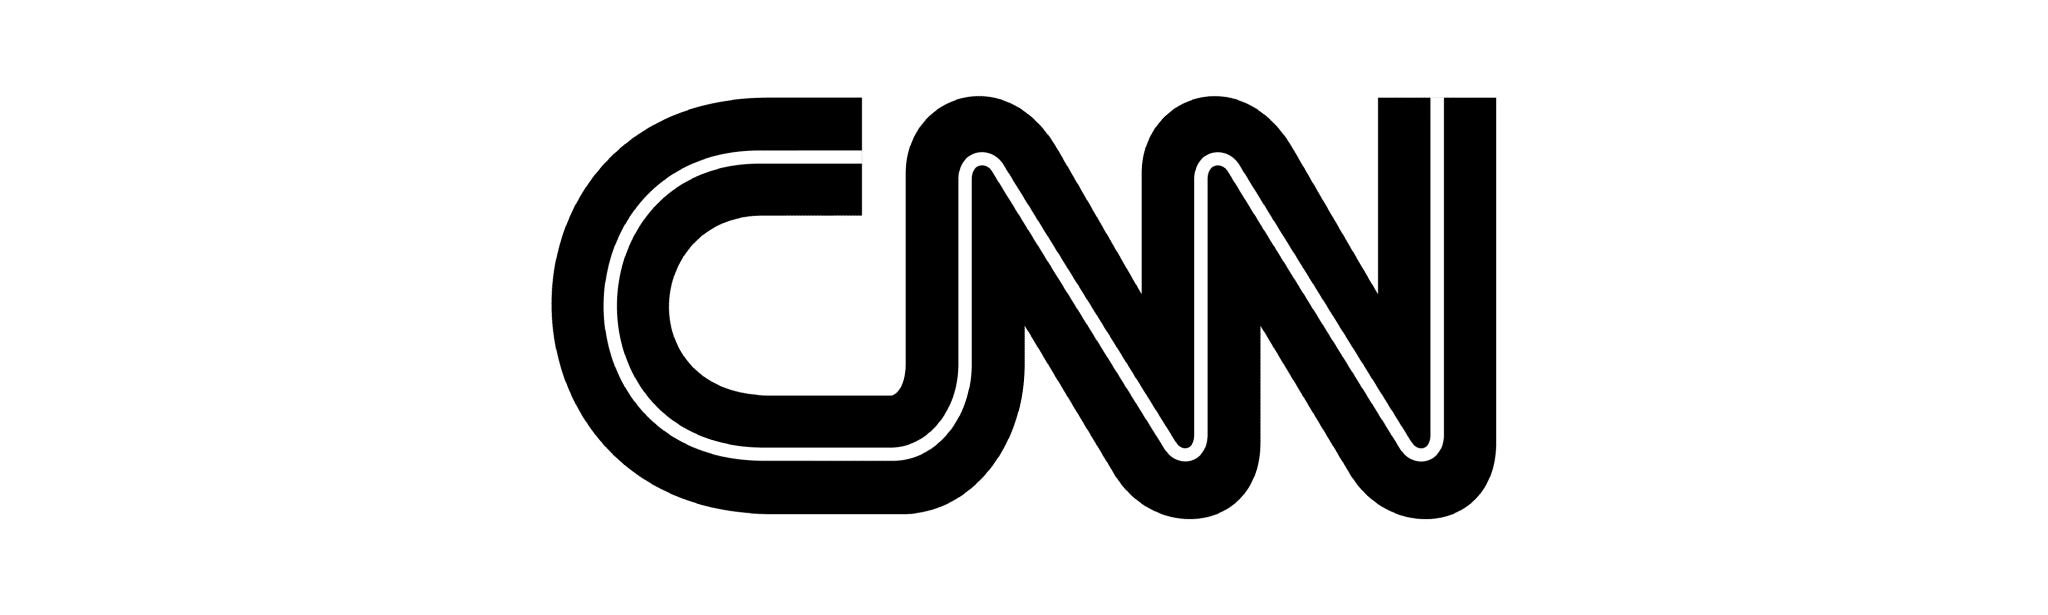 CFP Publication Logos CNN